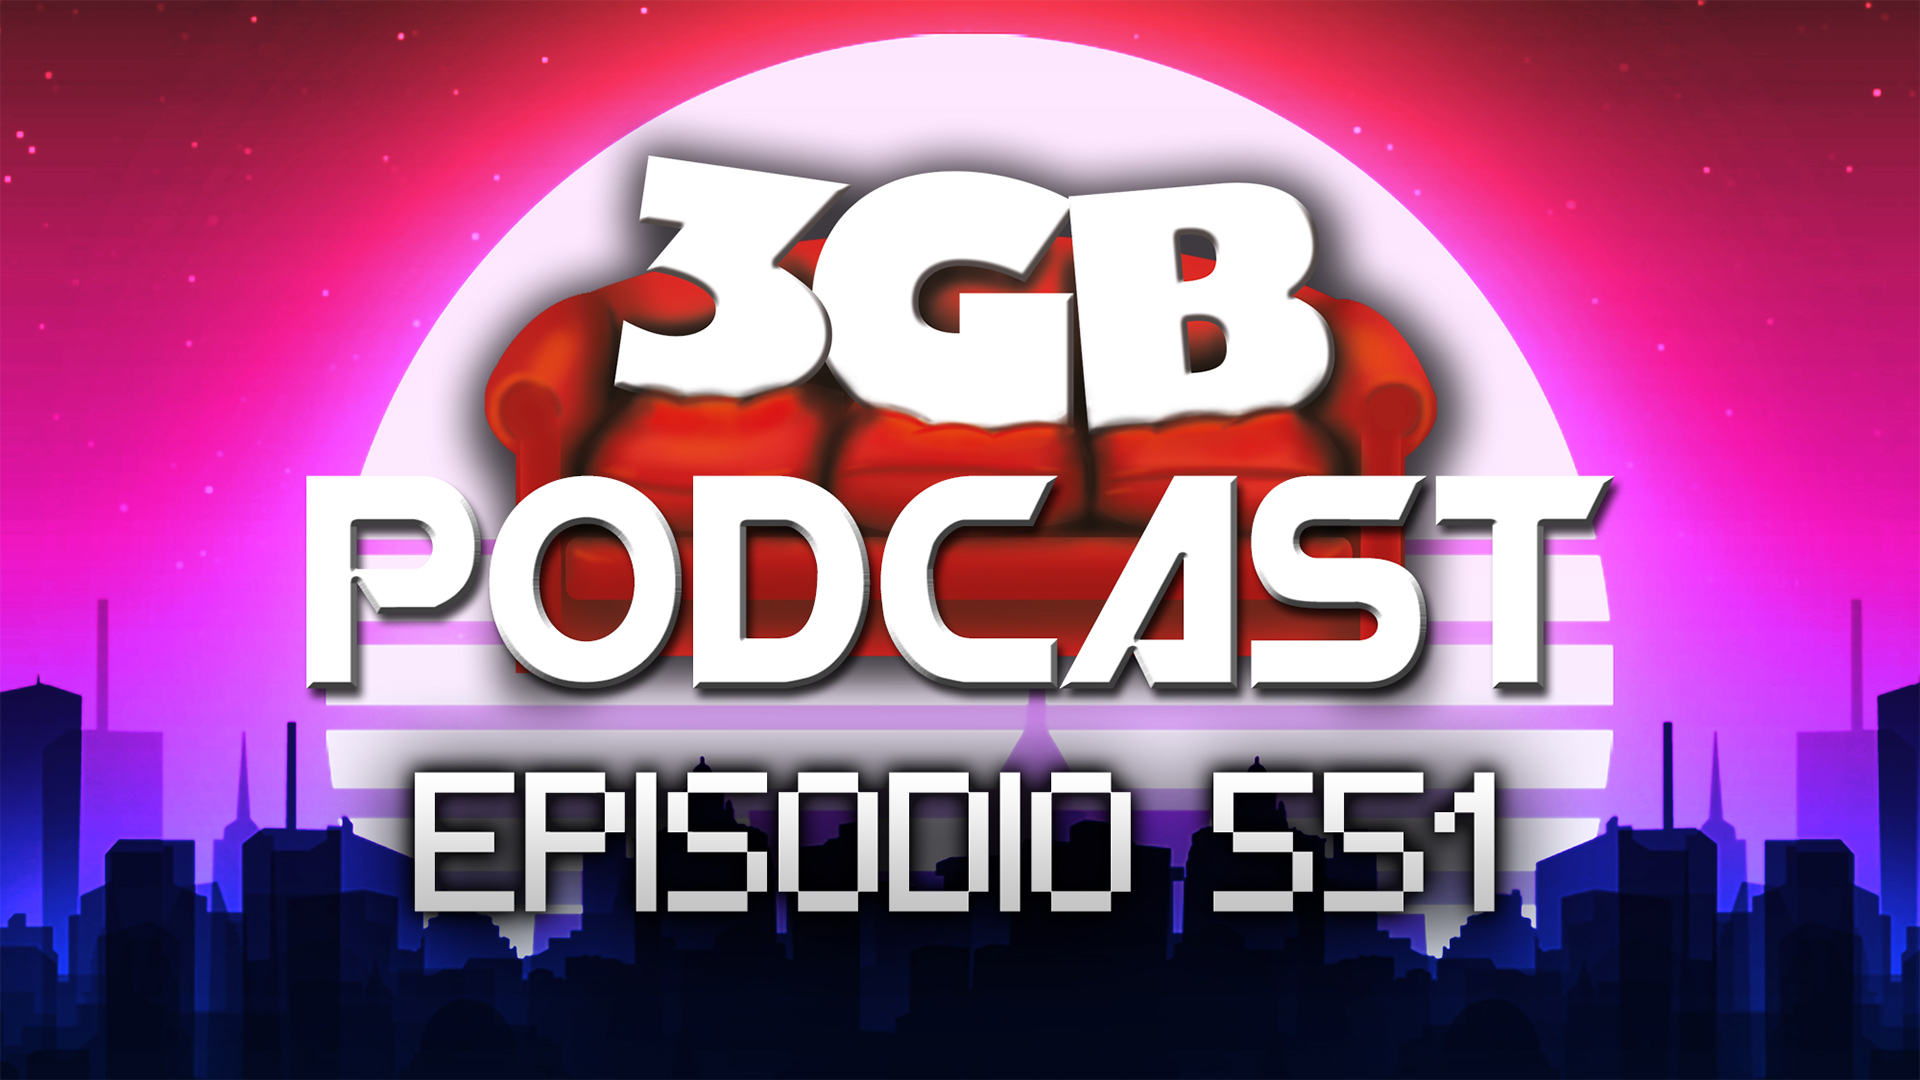 Podcast: Episodio 551 – Anticipando una Semana Ajetreada